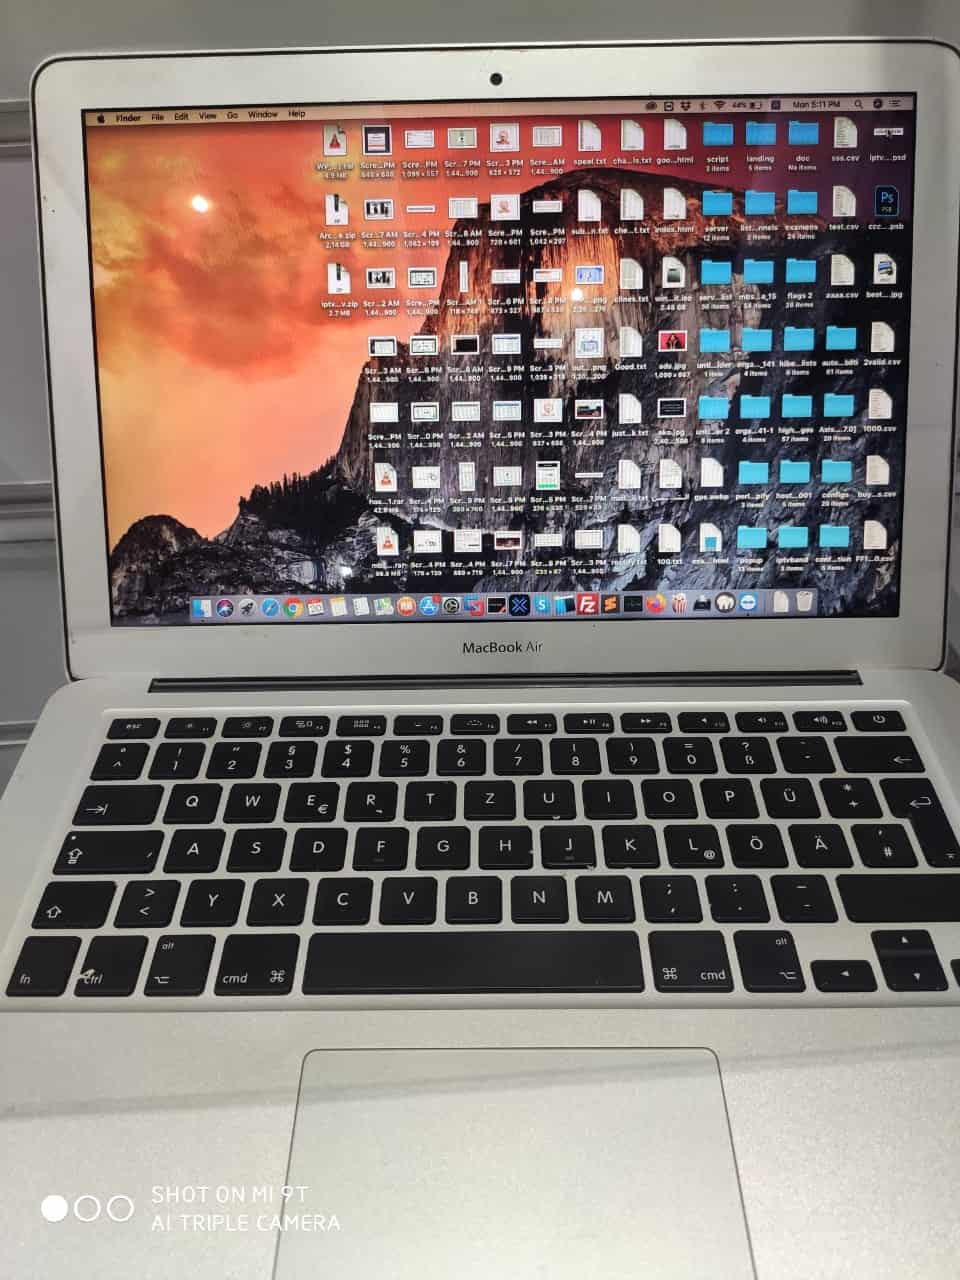 MacBook air core i7 1.7Ghz 8go Ram 256go SSD 2013